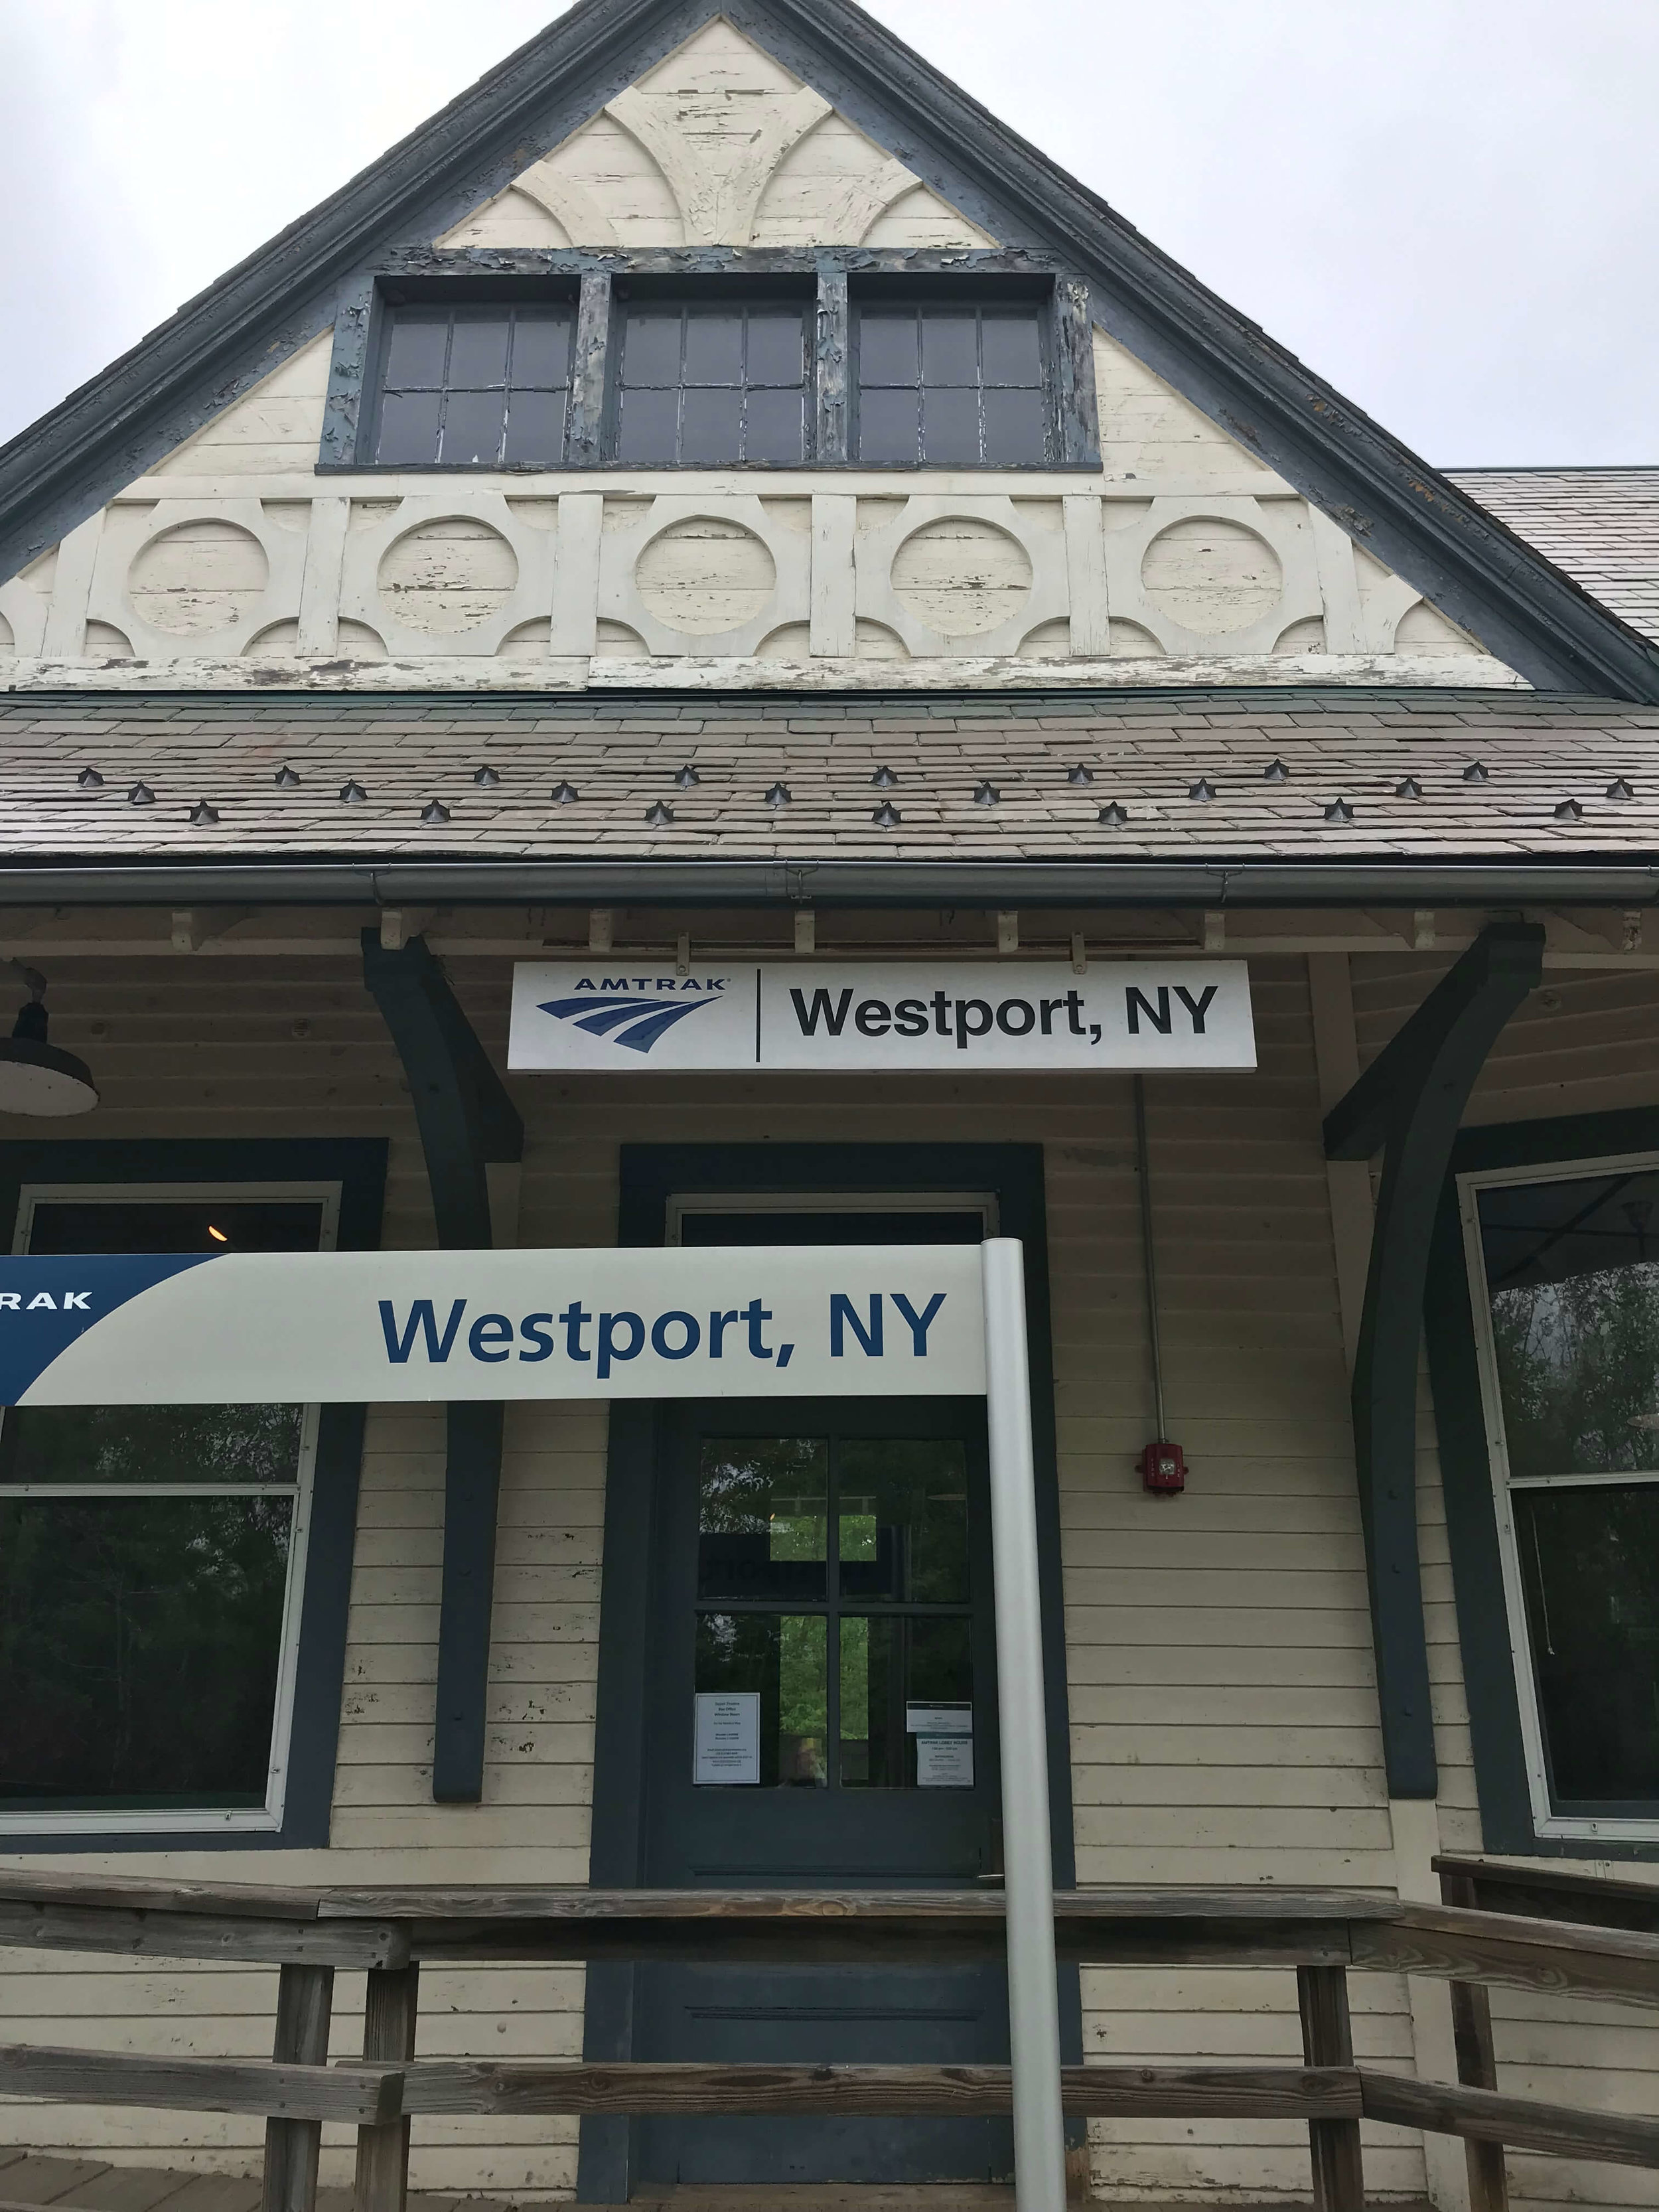 Essex County: The Depot Theatre, Inc. - Westport Train Depot (Depot Theatre) Building Condition Report